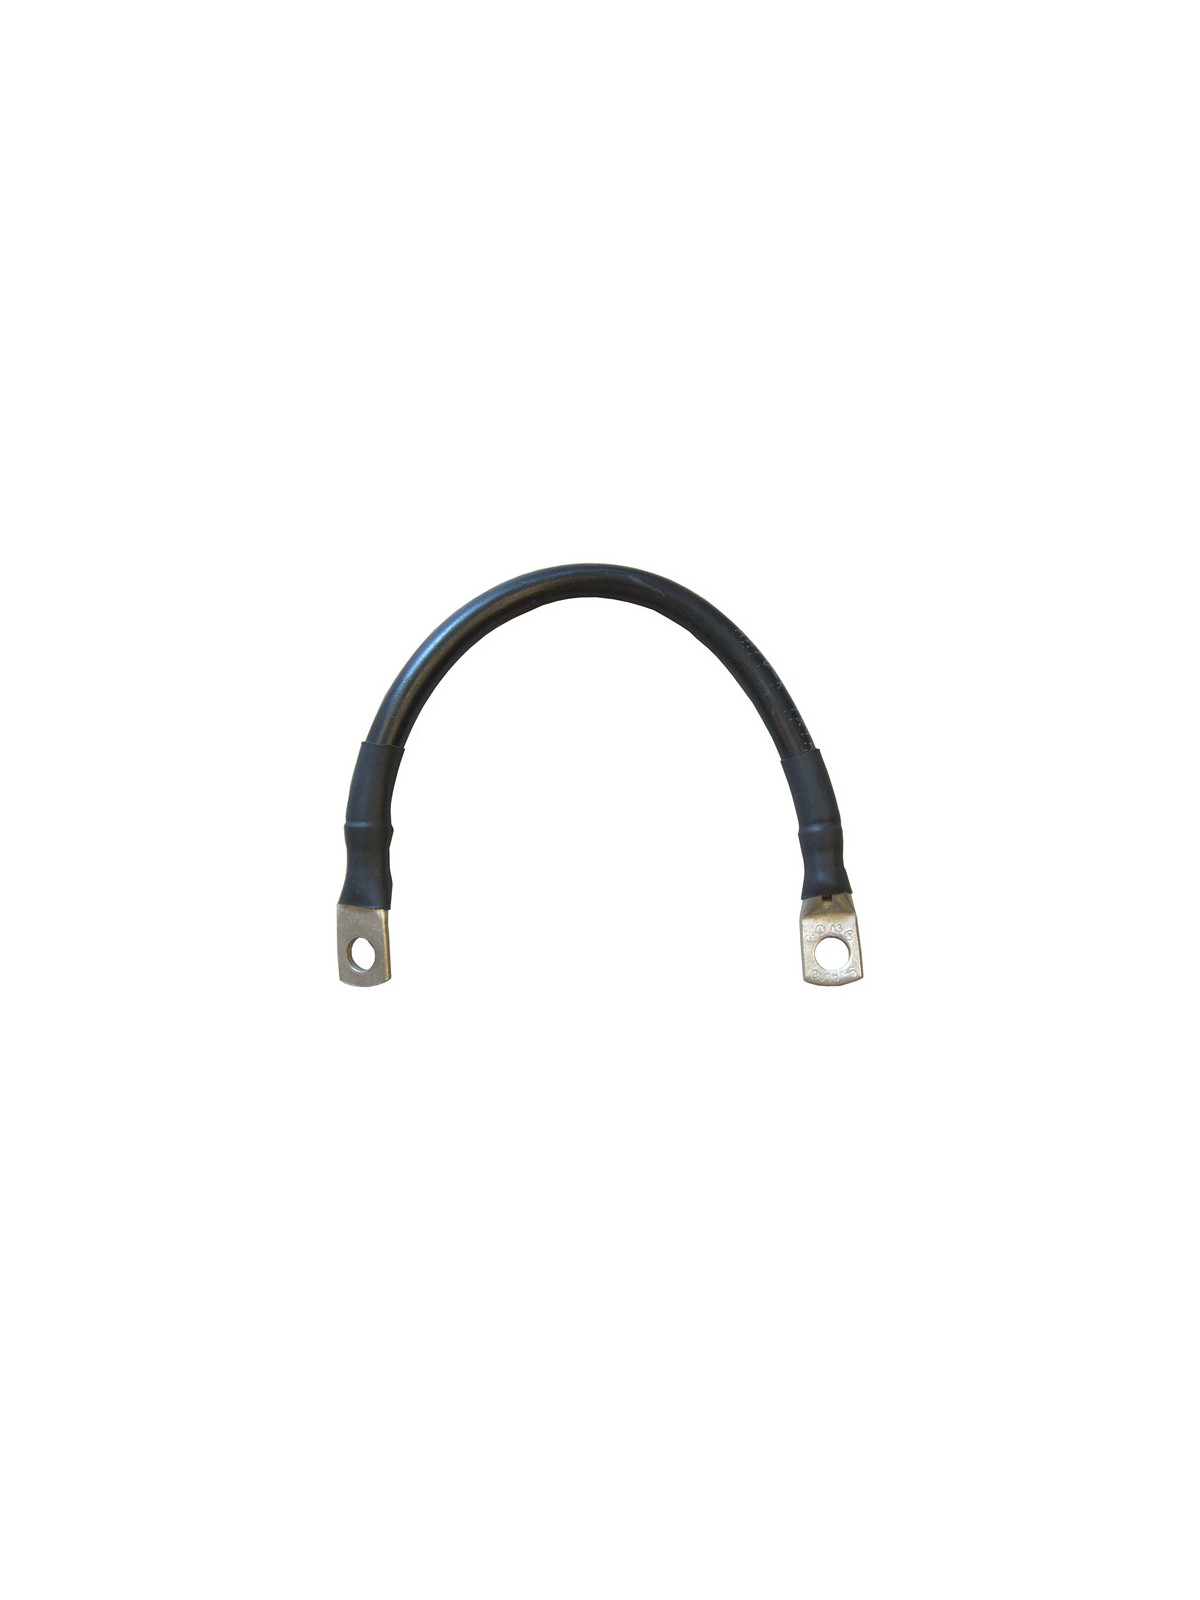 Cable flexible de 16 mm² con terminales de batería engarzados